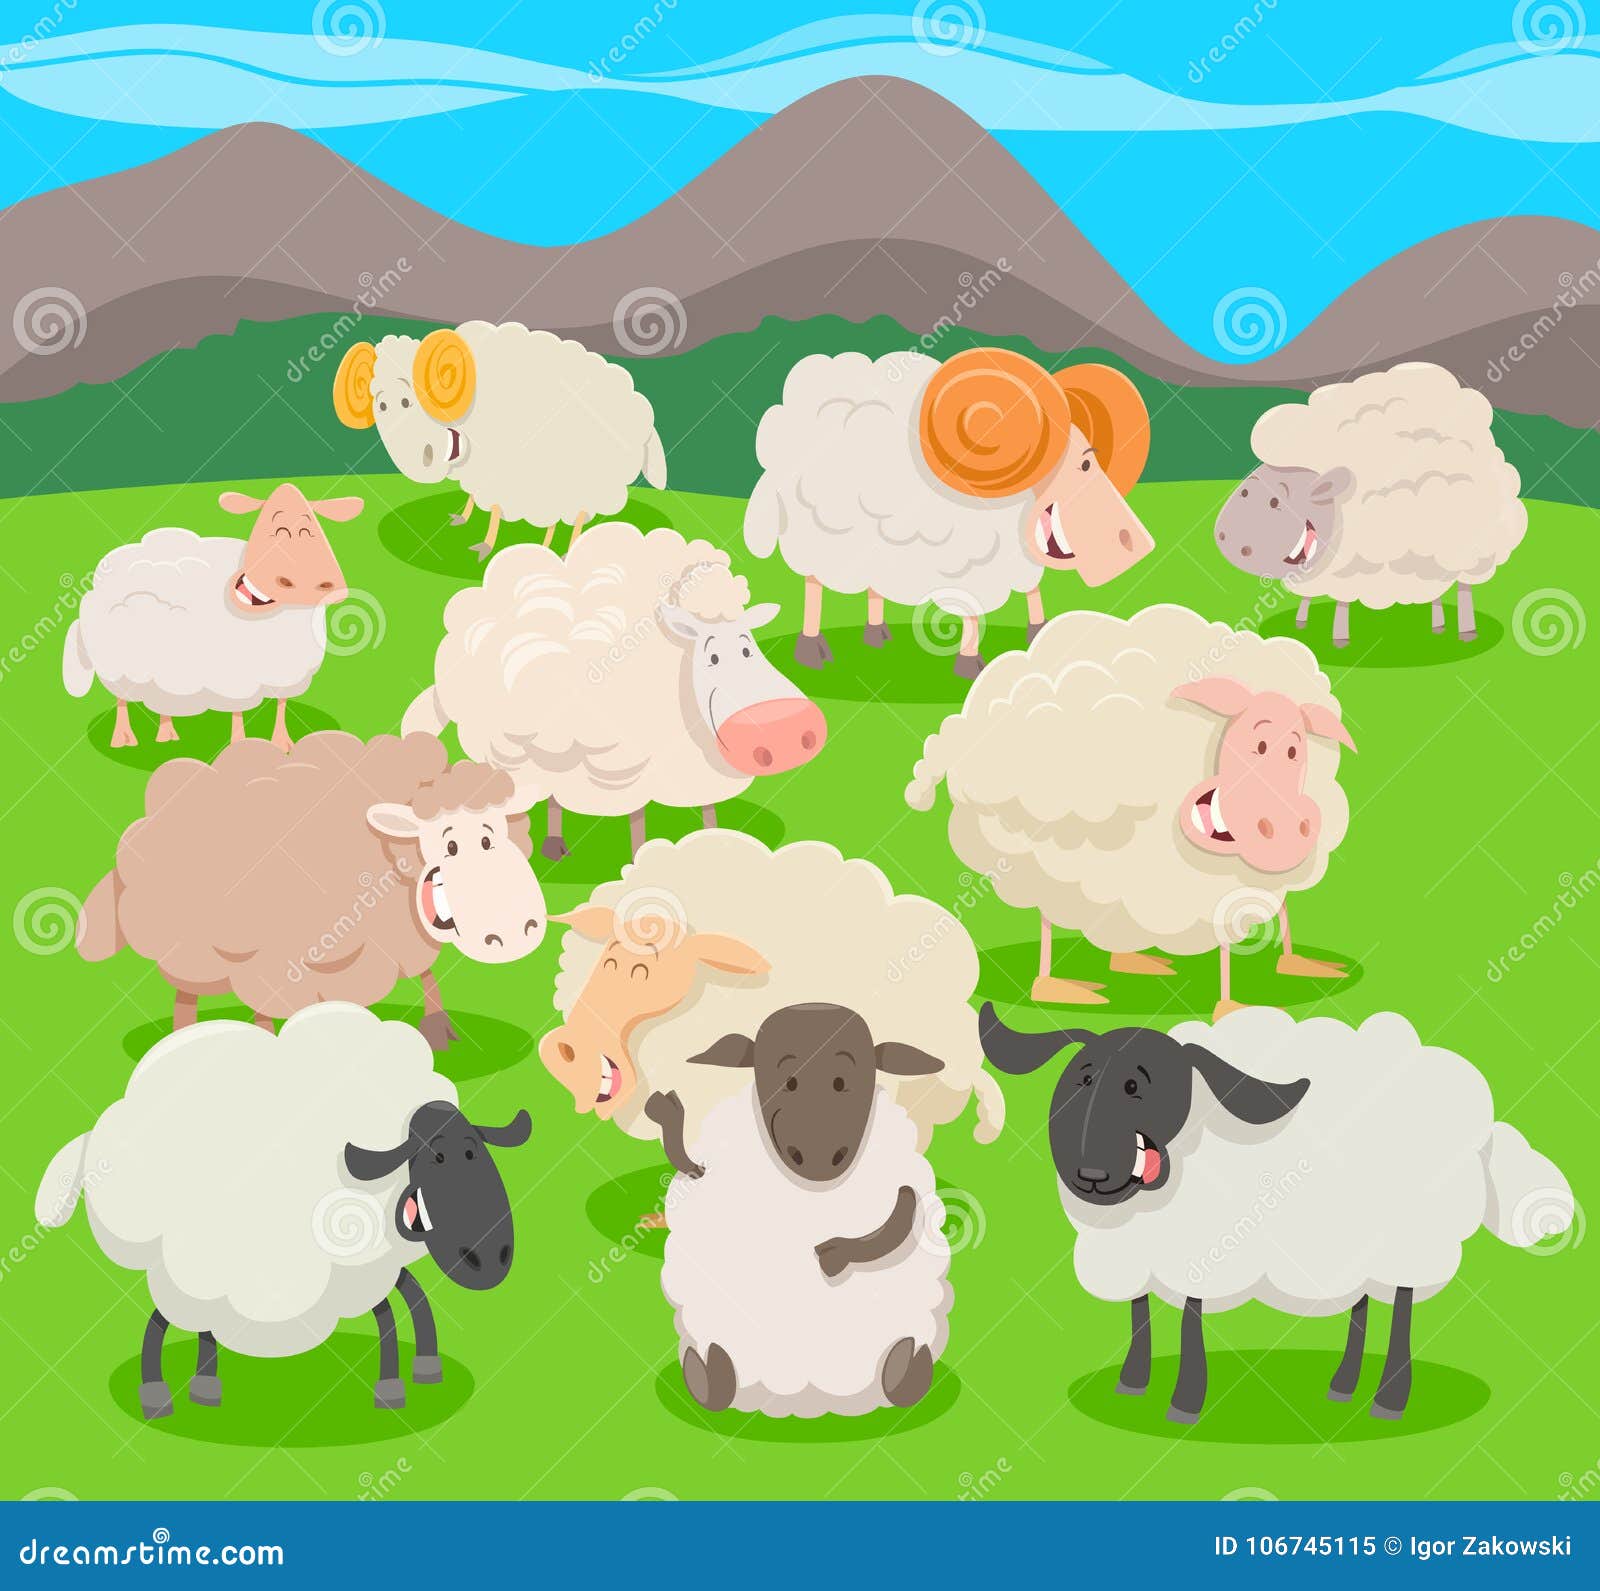 Flock of Sheep Characters Cartoon Illustration Stock Vector - Illustration  of farm, mountain: 106745115